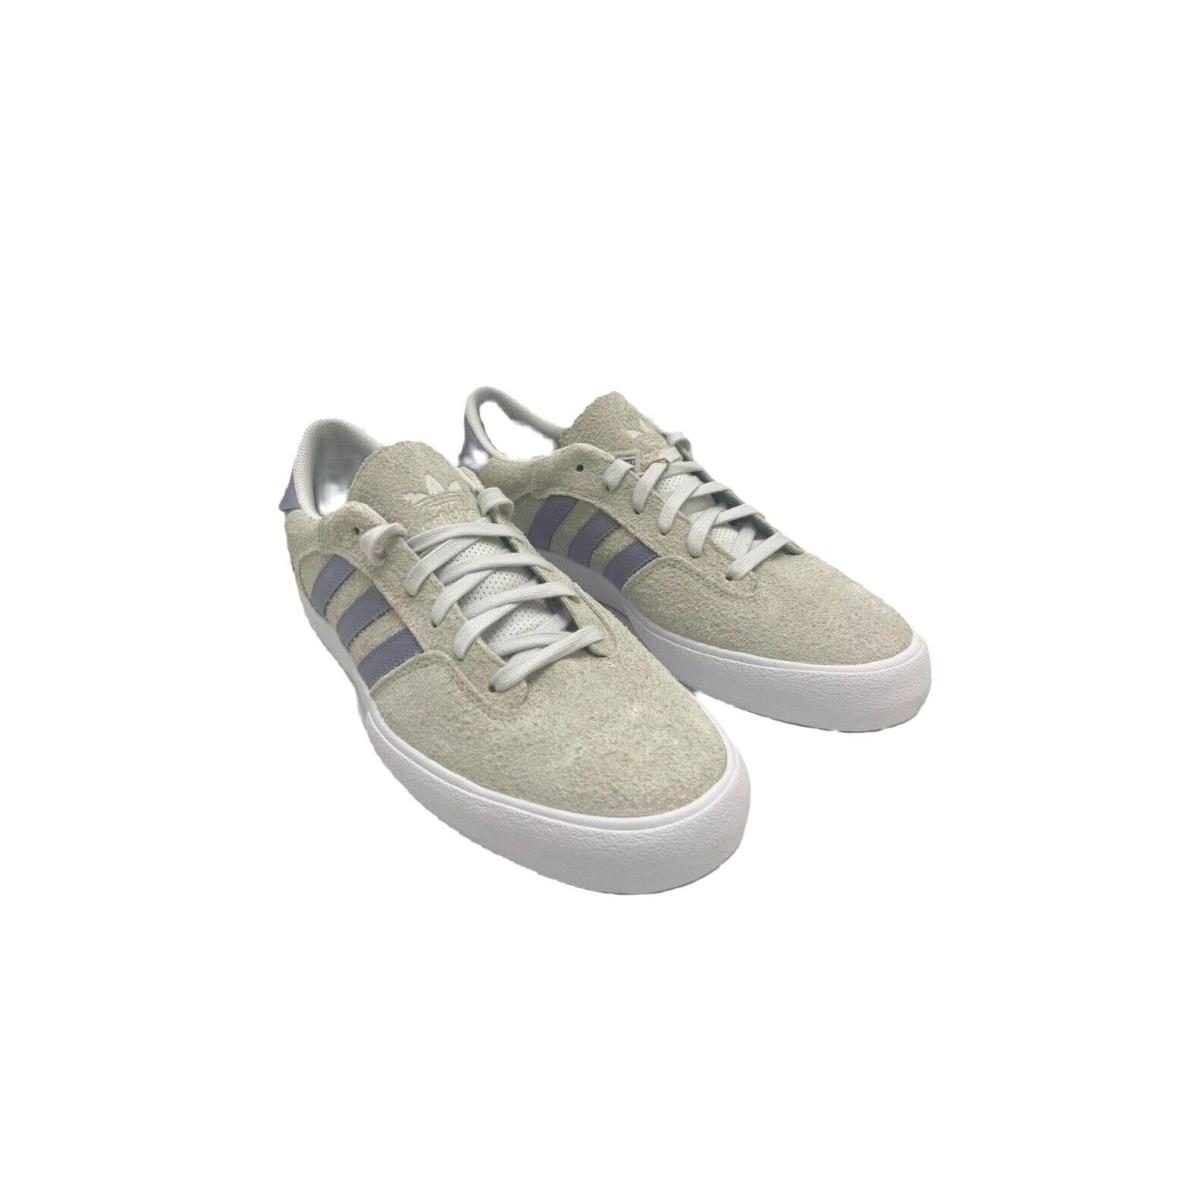 Adidas Men`s Matchbreak Super Casual/activewear Shoes - Crystal White/Silver Violet/Core Black